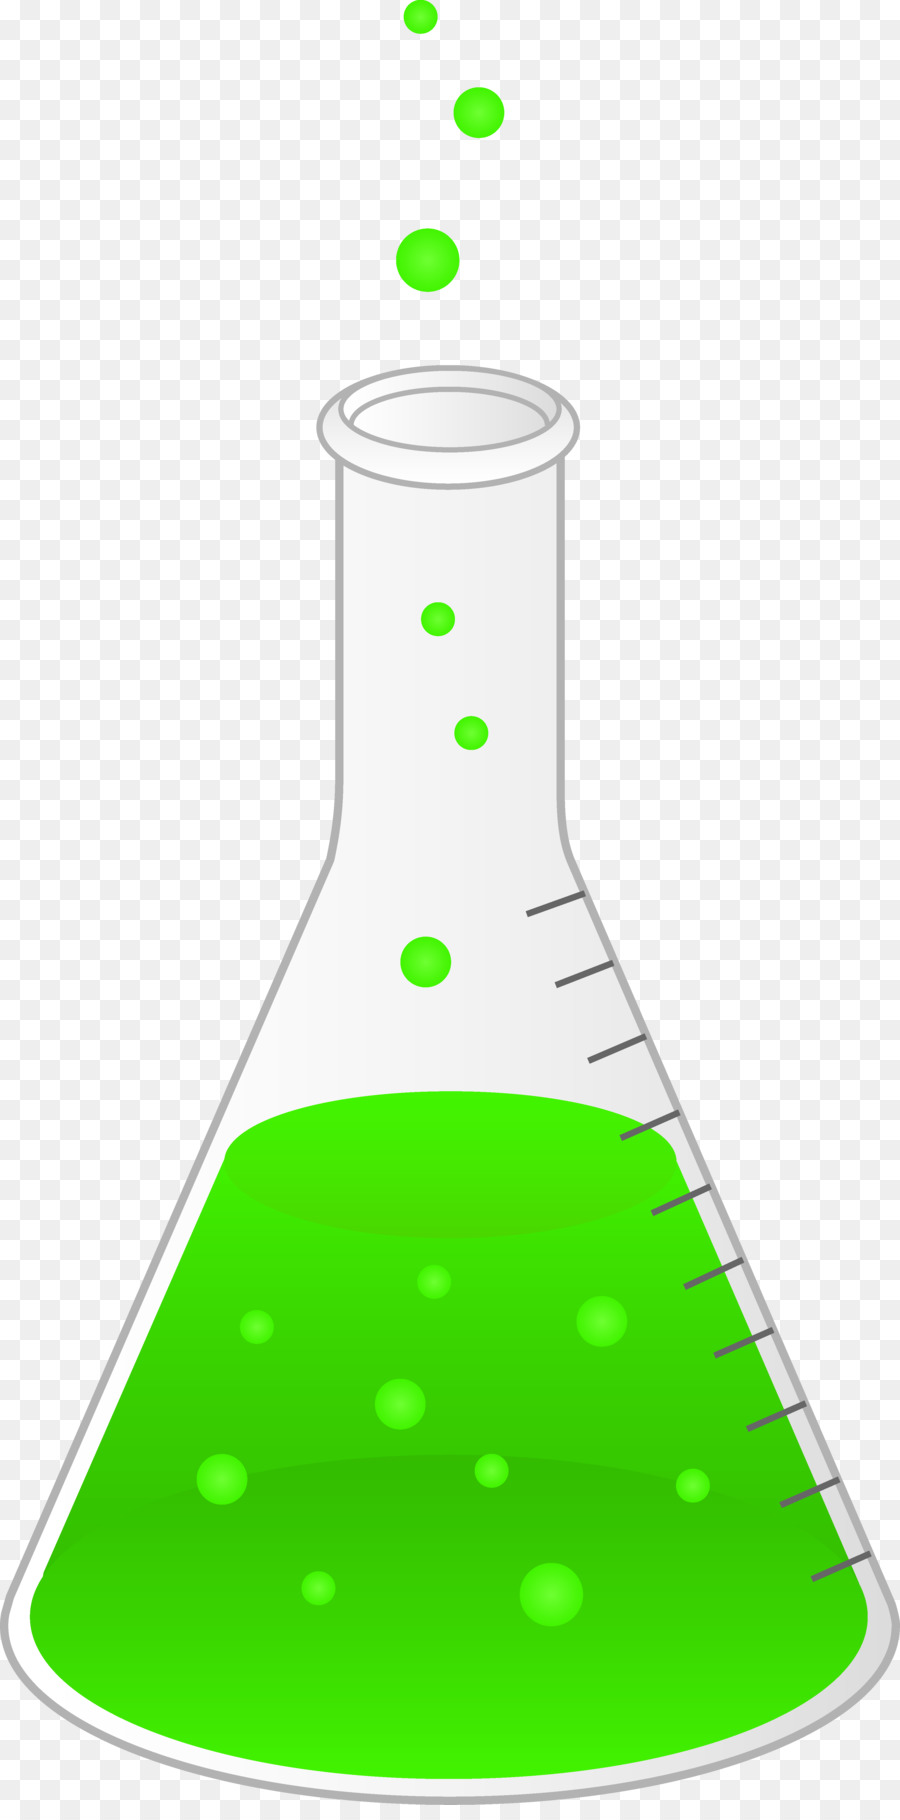 Beaker clipart lab beaker. Science chemistry laboratory flask